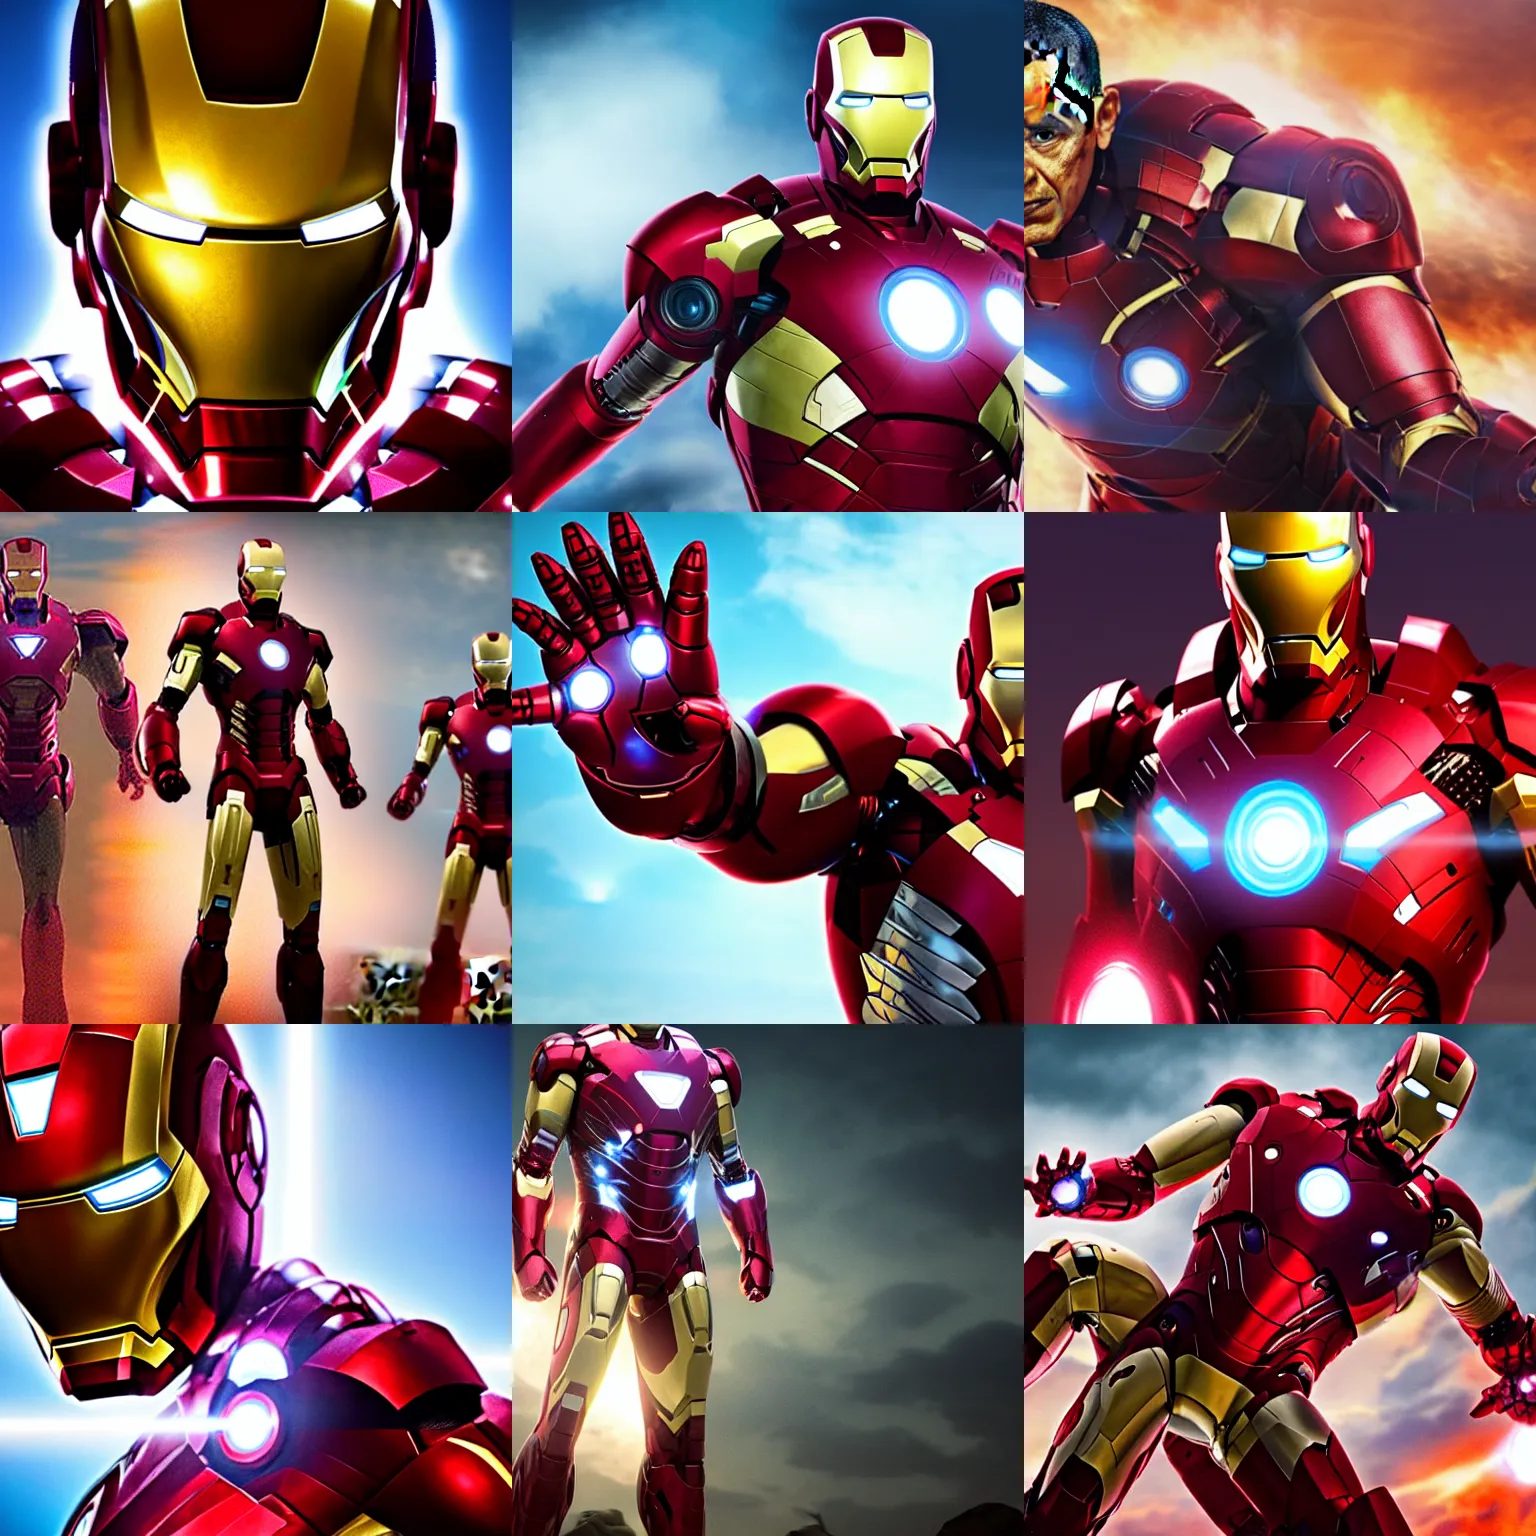 Prompt: Barrack Obama as Iron Man, 4K, cinematic lighting, epic scene